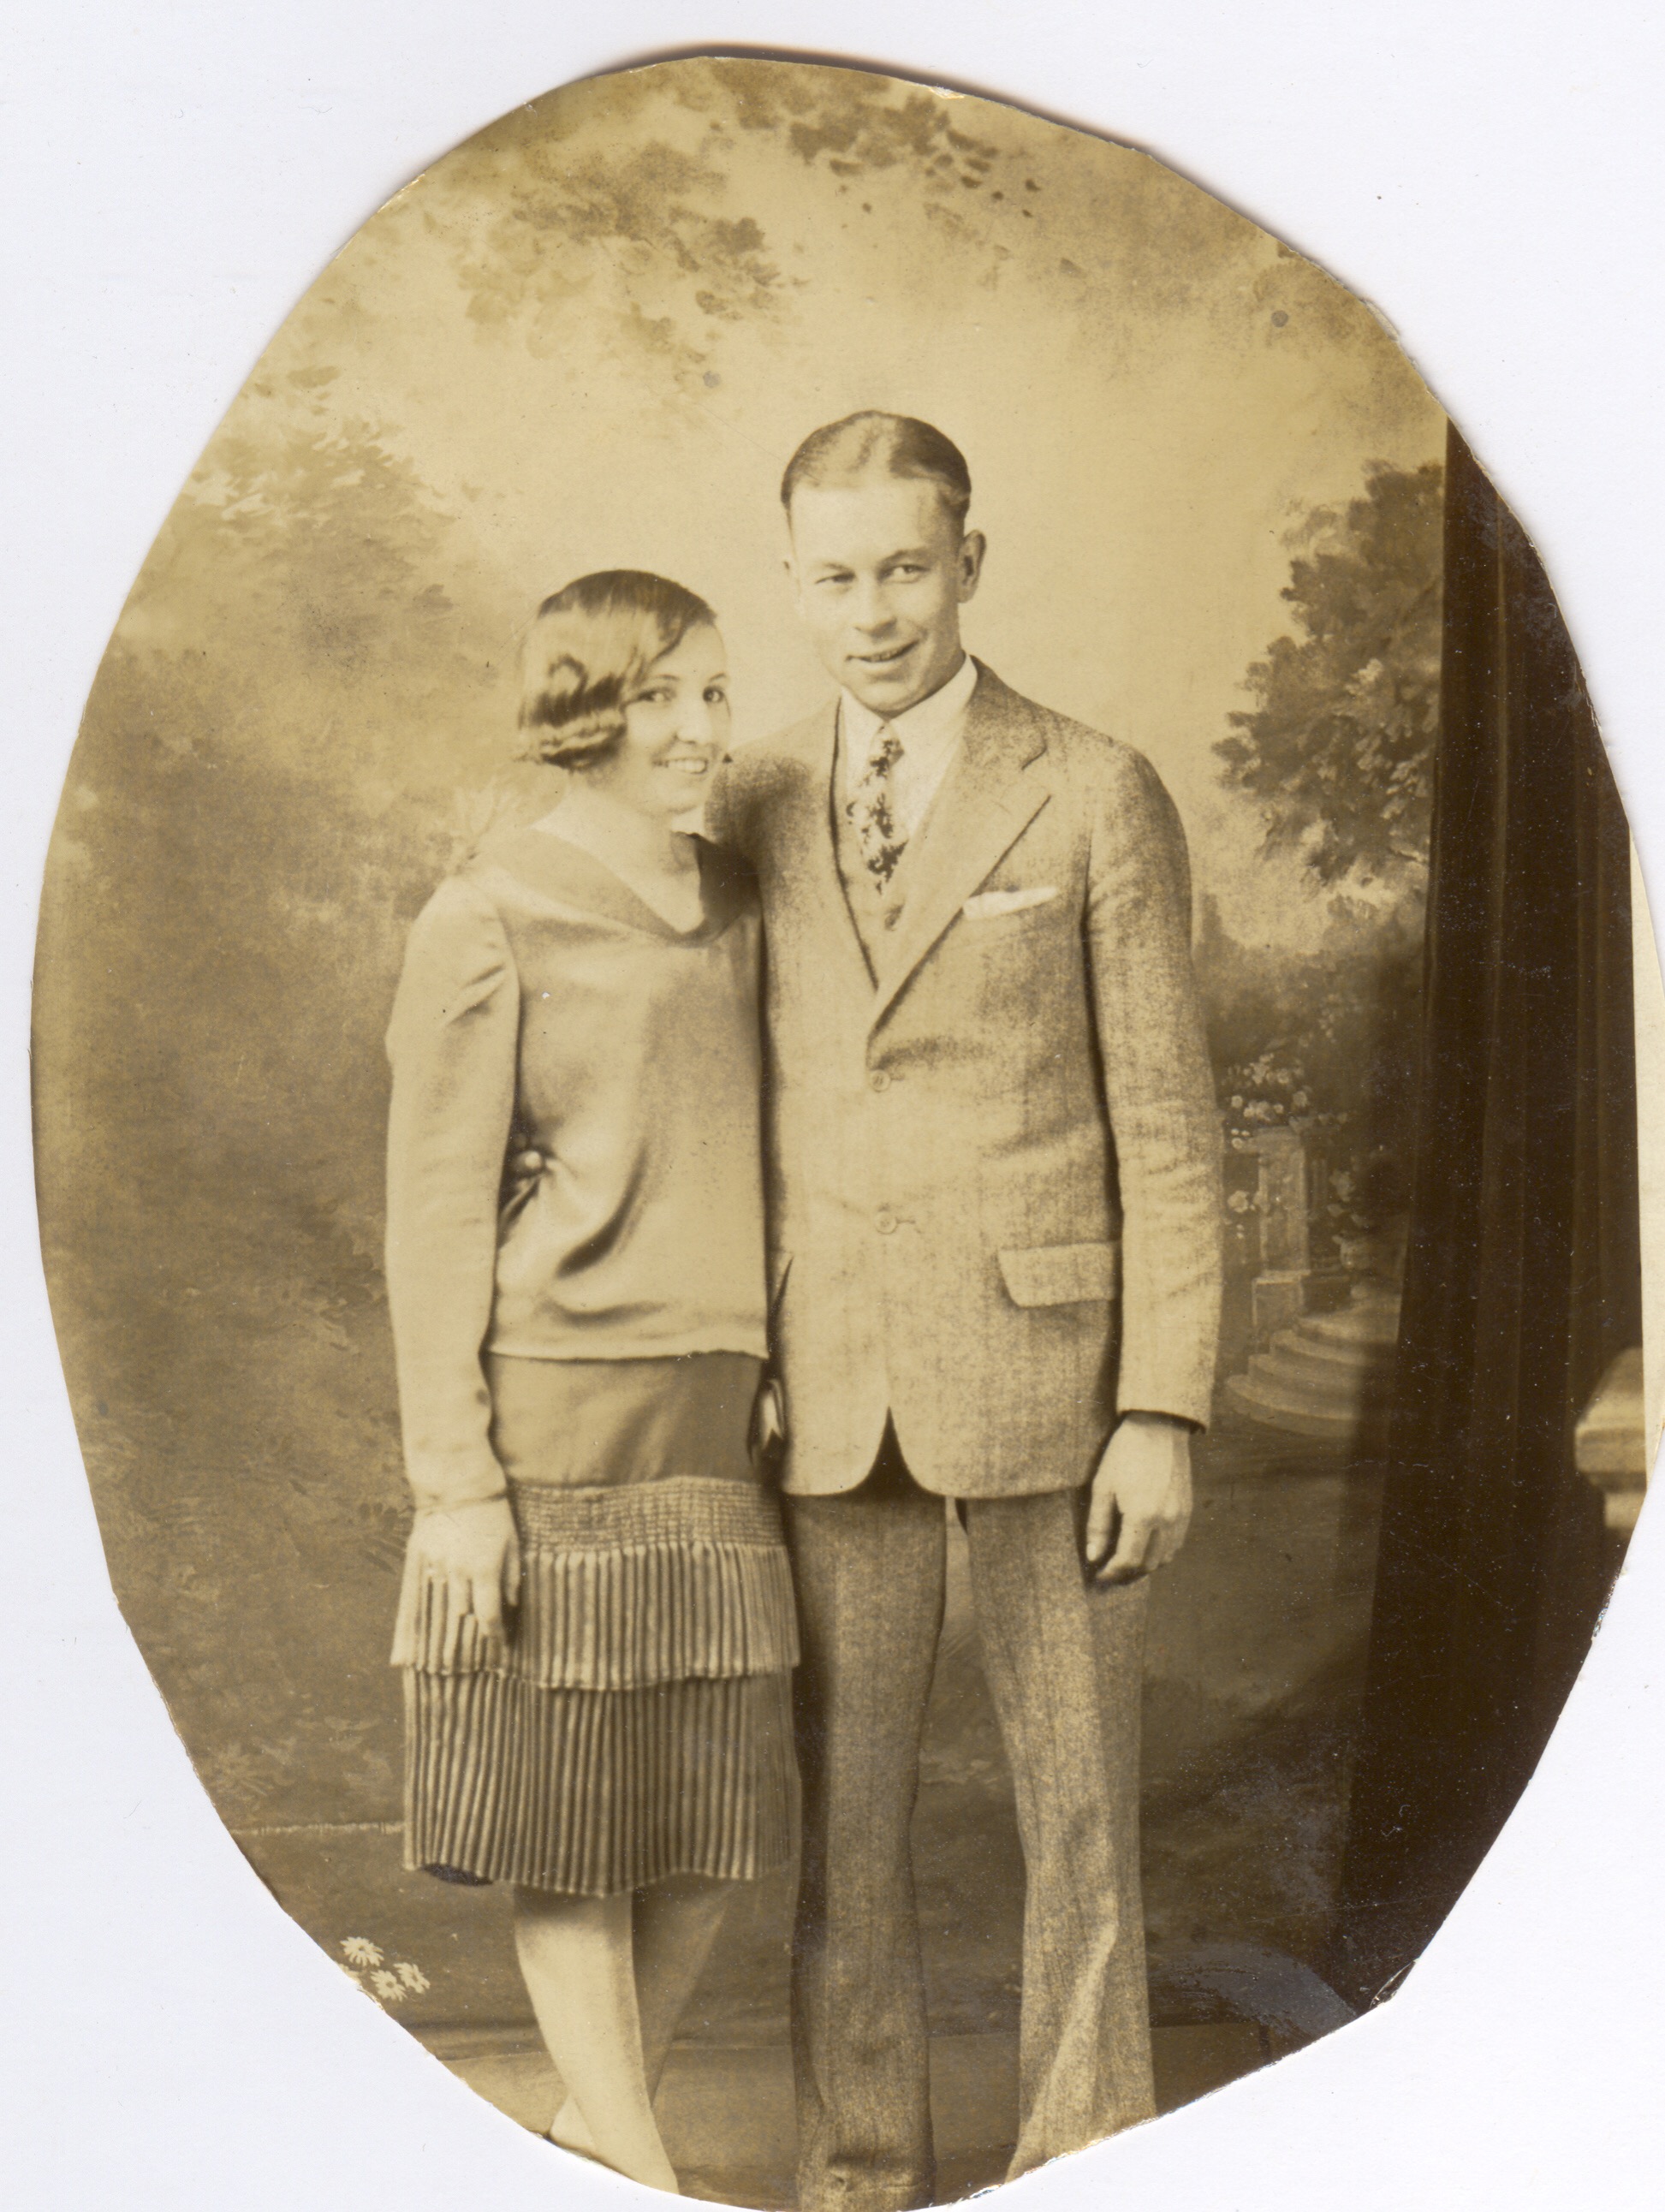 Wedding photo? About 1920.